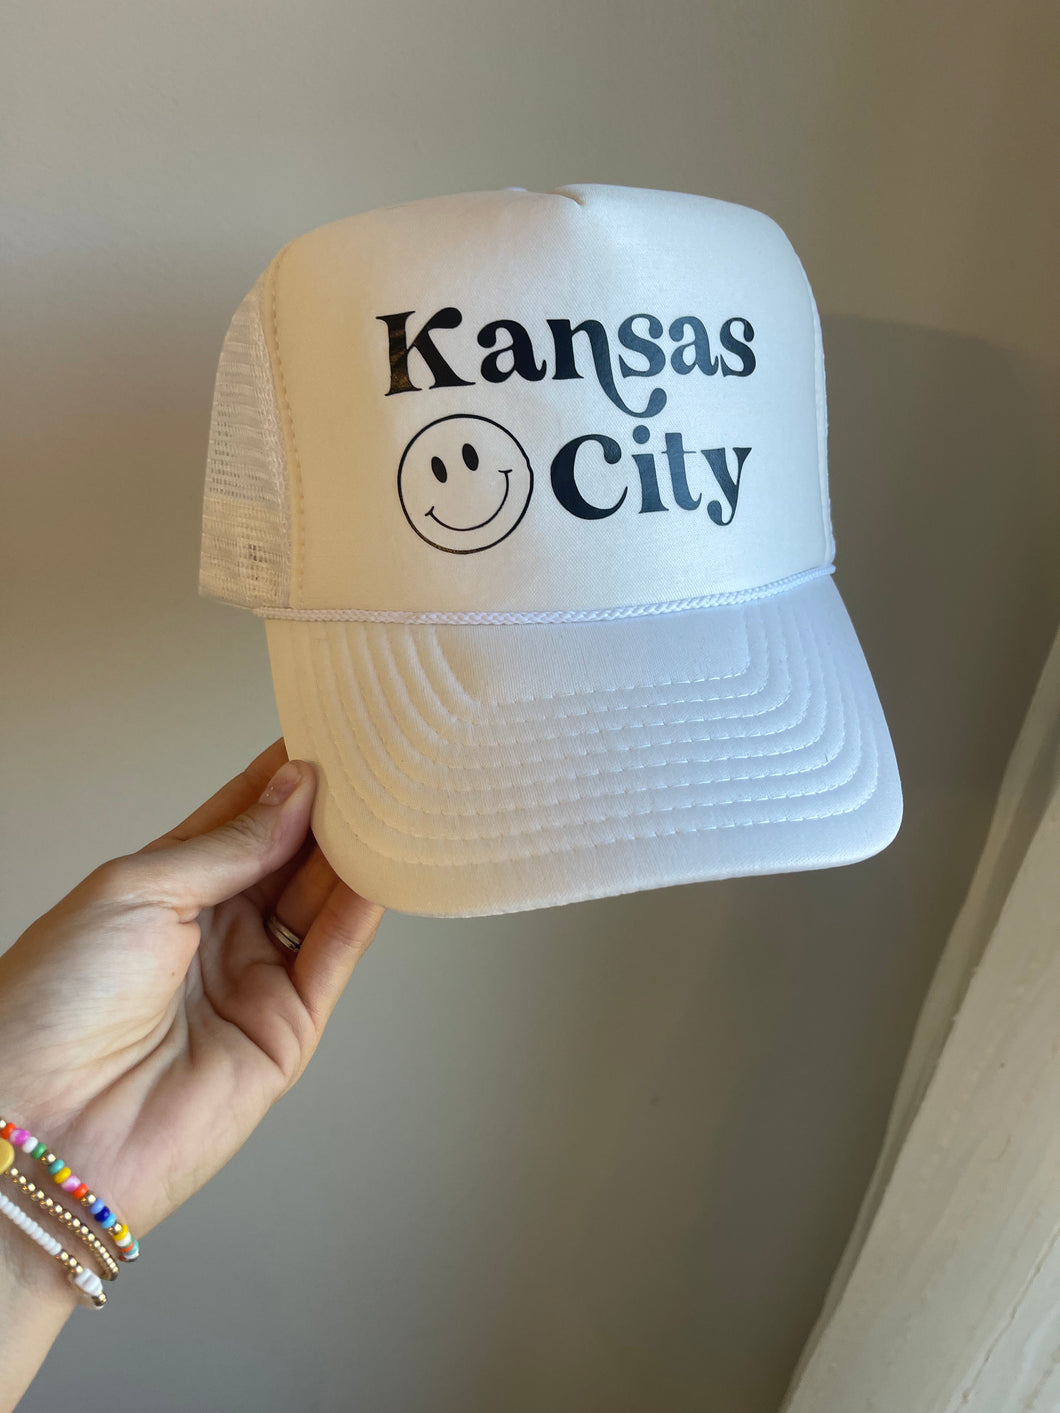 Flawed** Kansas City trucker hat